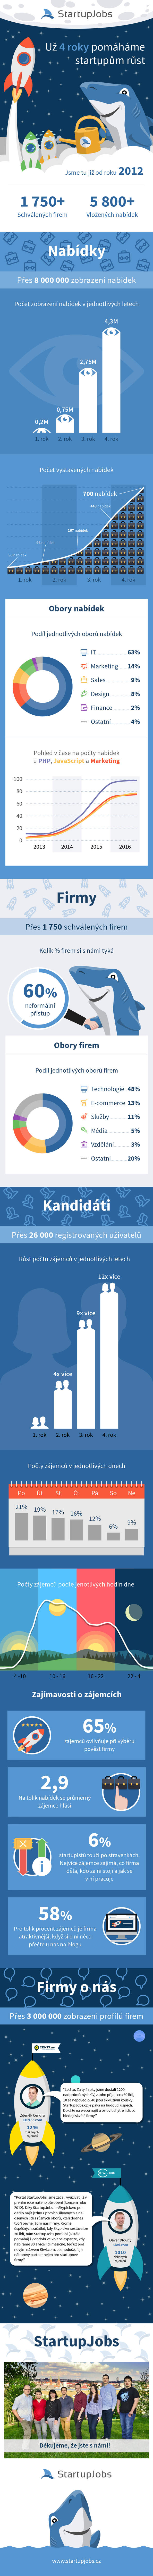 StartupJobs.cz infografika 4 roky